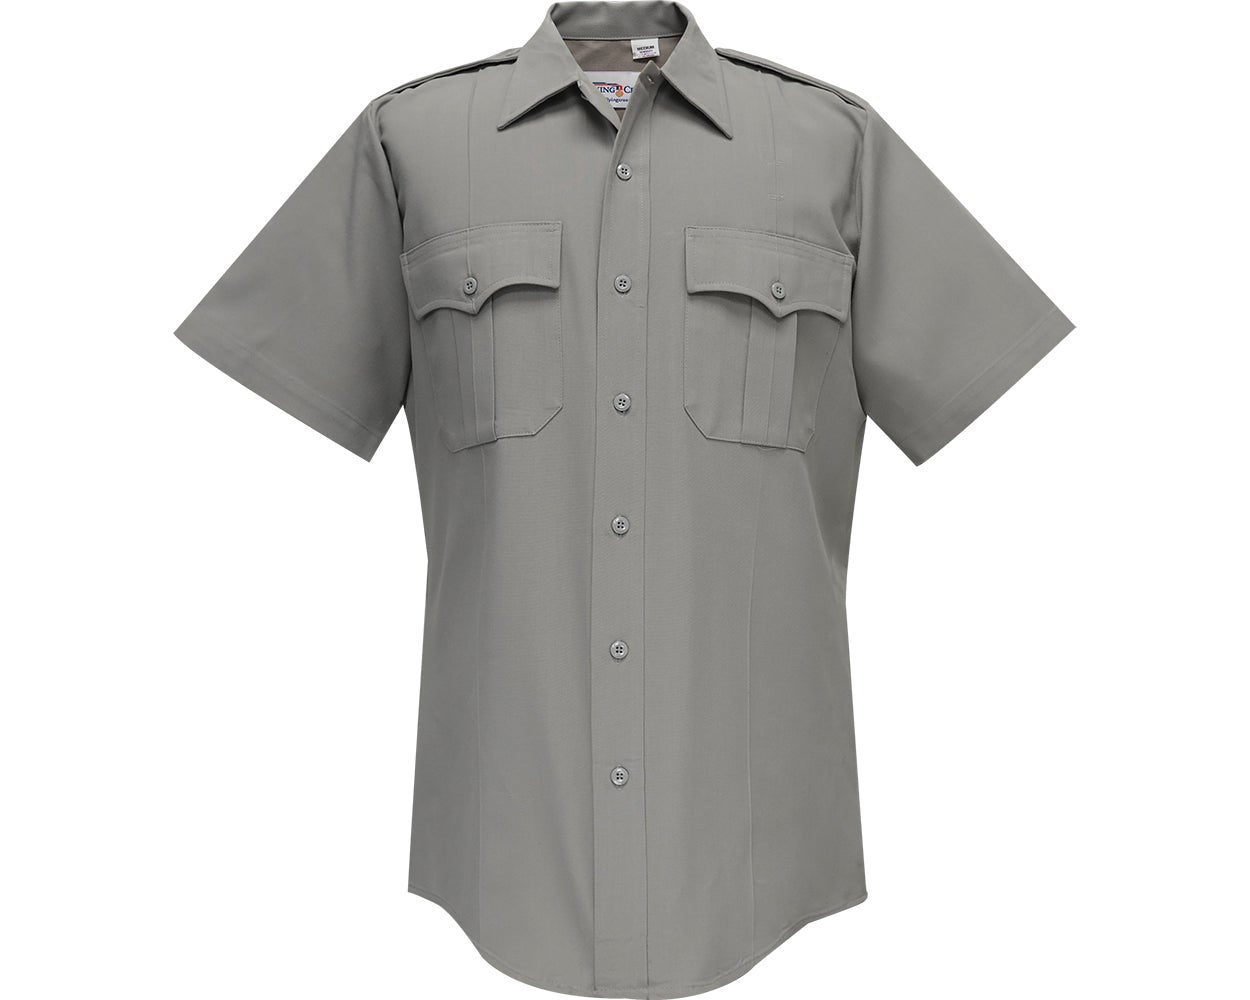 Flying Cross Command 100% Polyester Men's Short Sleeve Uniform Shirt with Zipper 85R77Z/87R78Z - Gray, 15.5